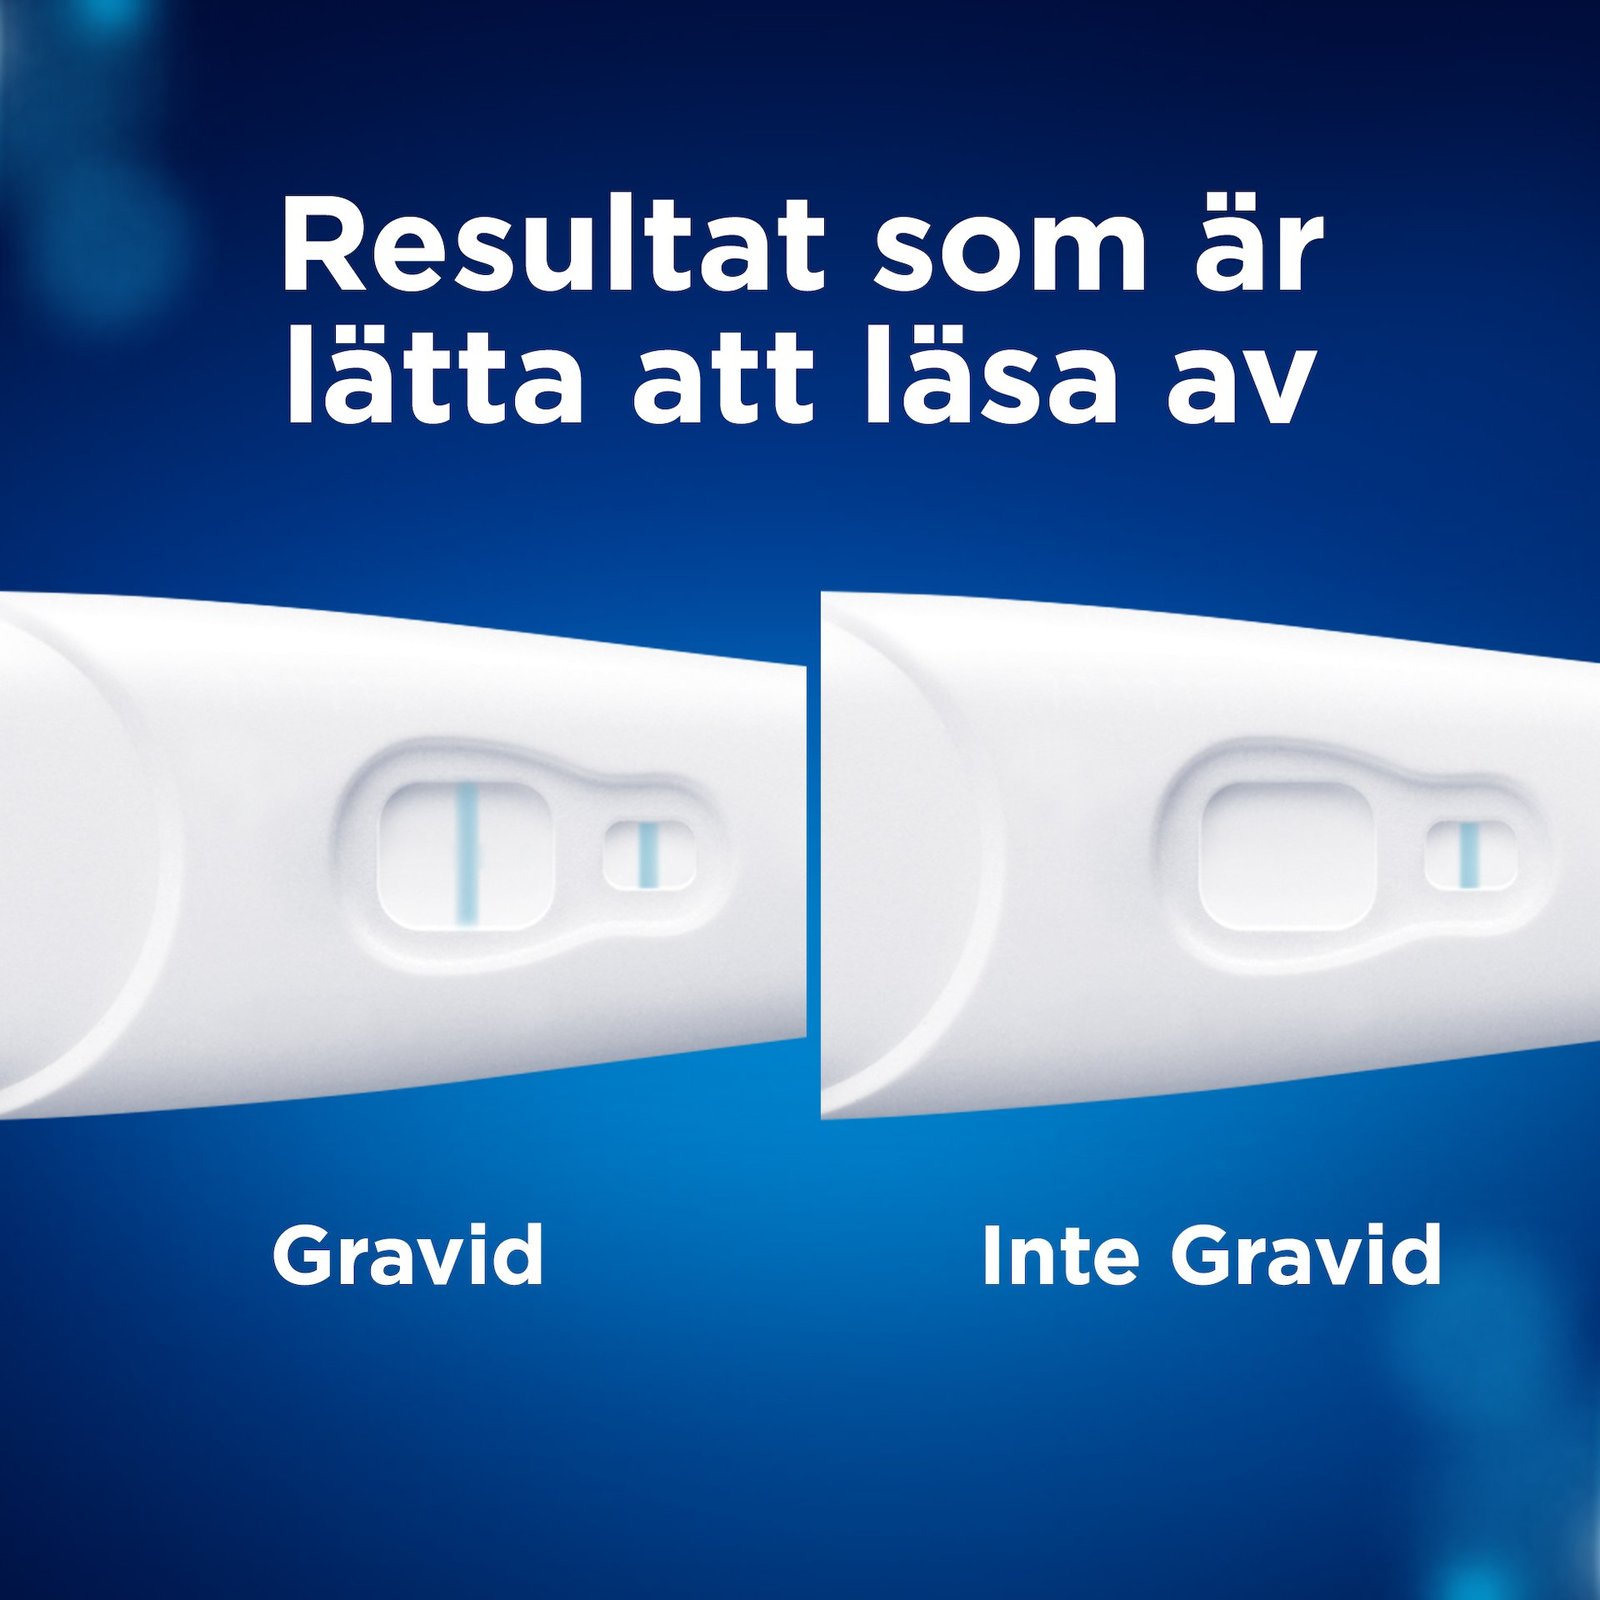 Clearblue Ultratidigt Graviditetstest - resultat sex dagar tidigare 3 st